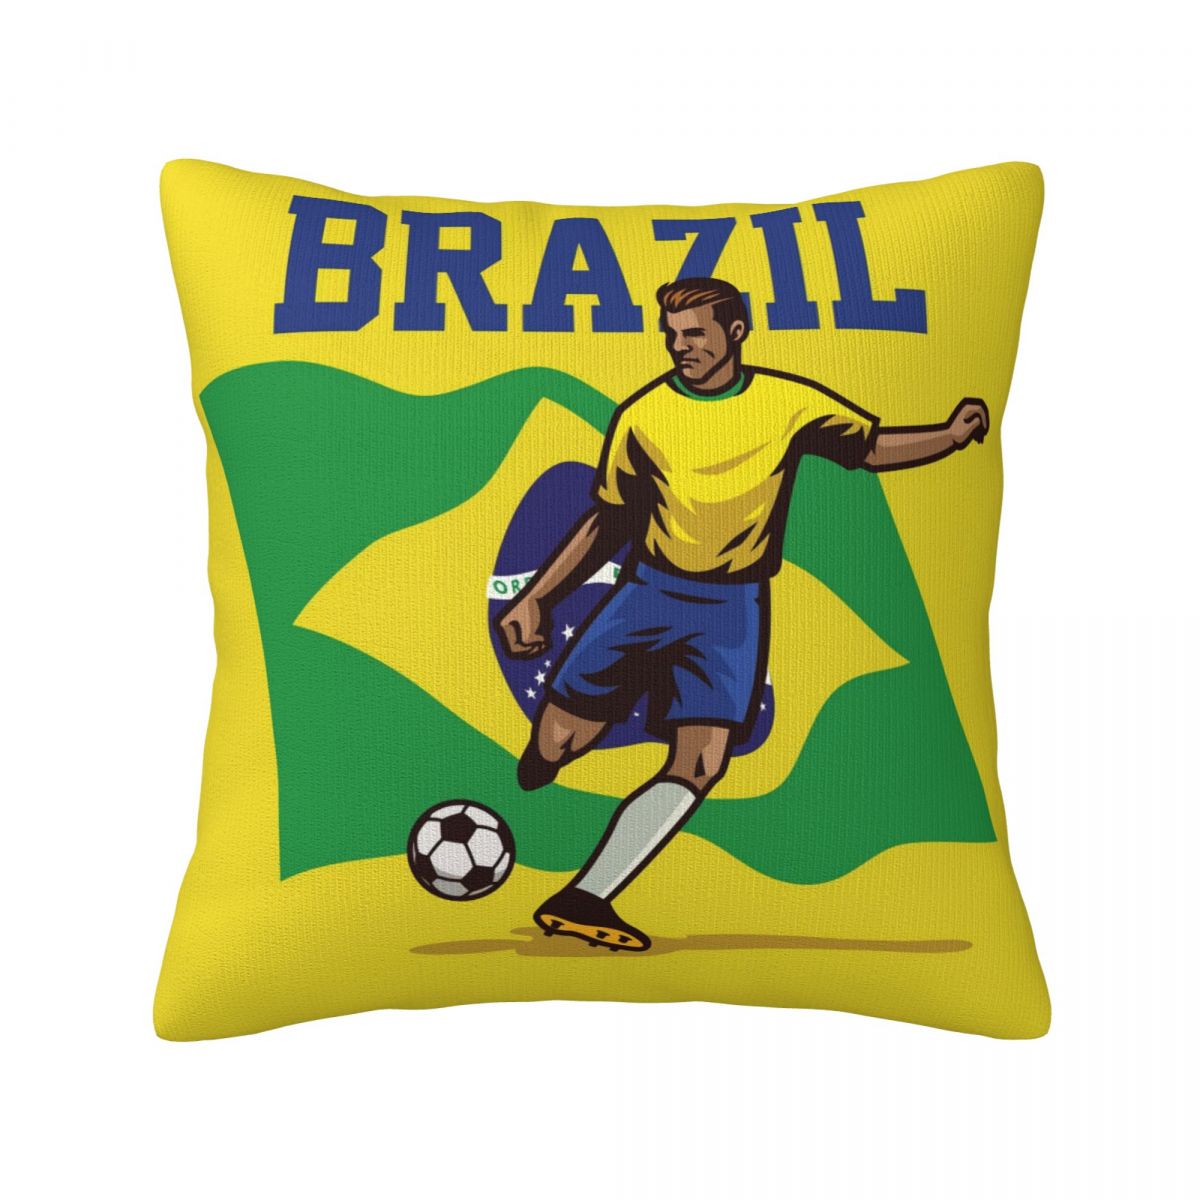 Brazil Soccer Player Decorative Throw Pillow